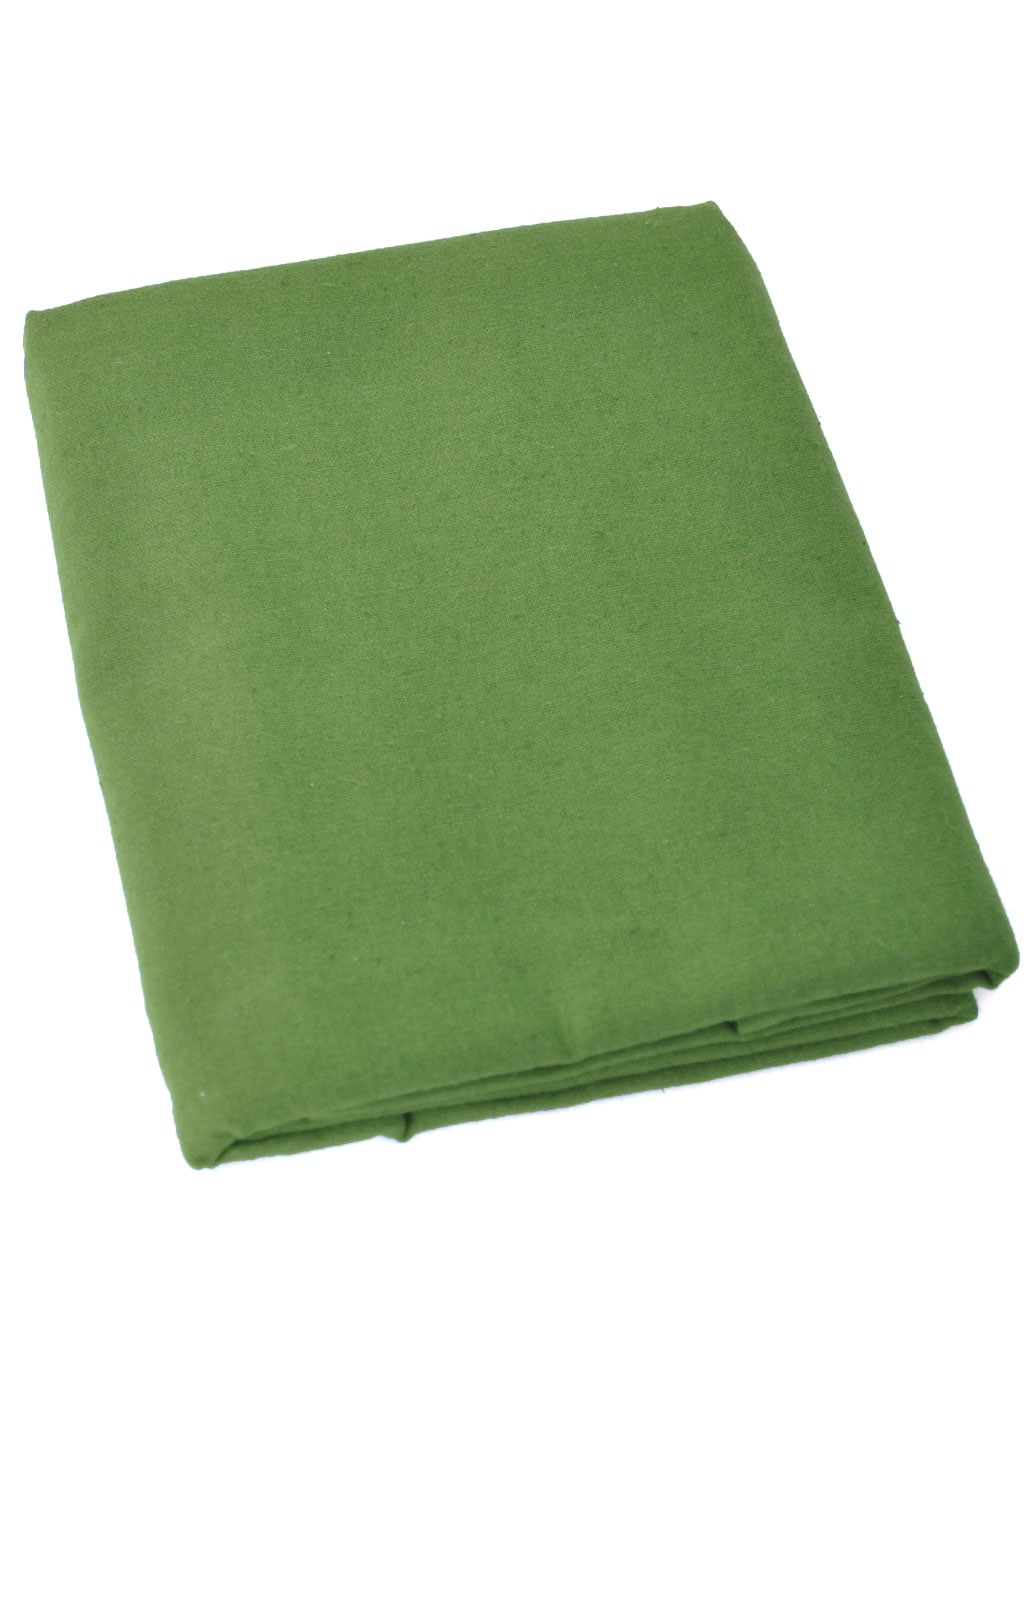 Silktraveltowel green